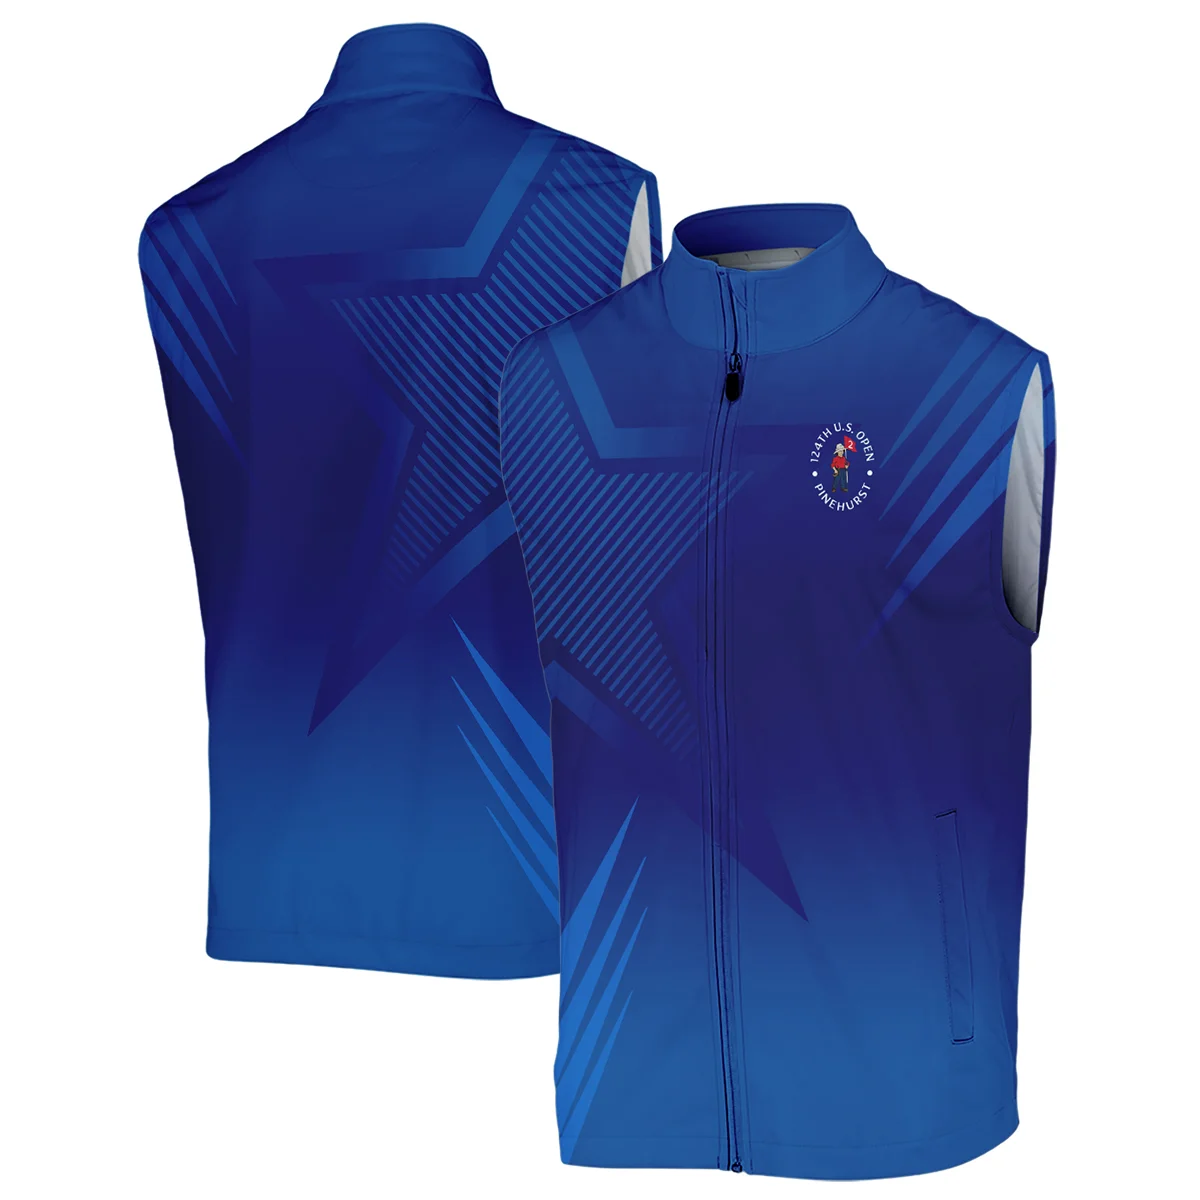 124th U.S. Open Pinehurst No.2 Callaway Unisex T-Shirt Dark Blue Gradient Star Pattern T-Shirt